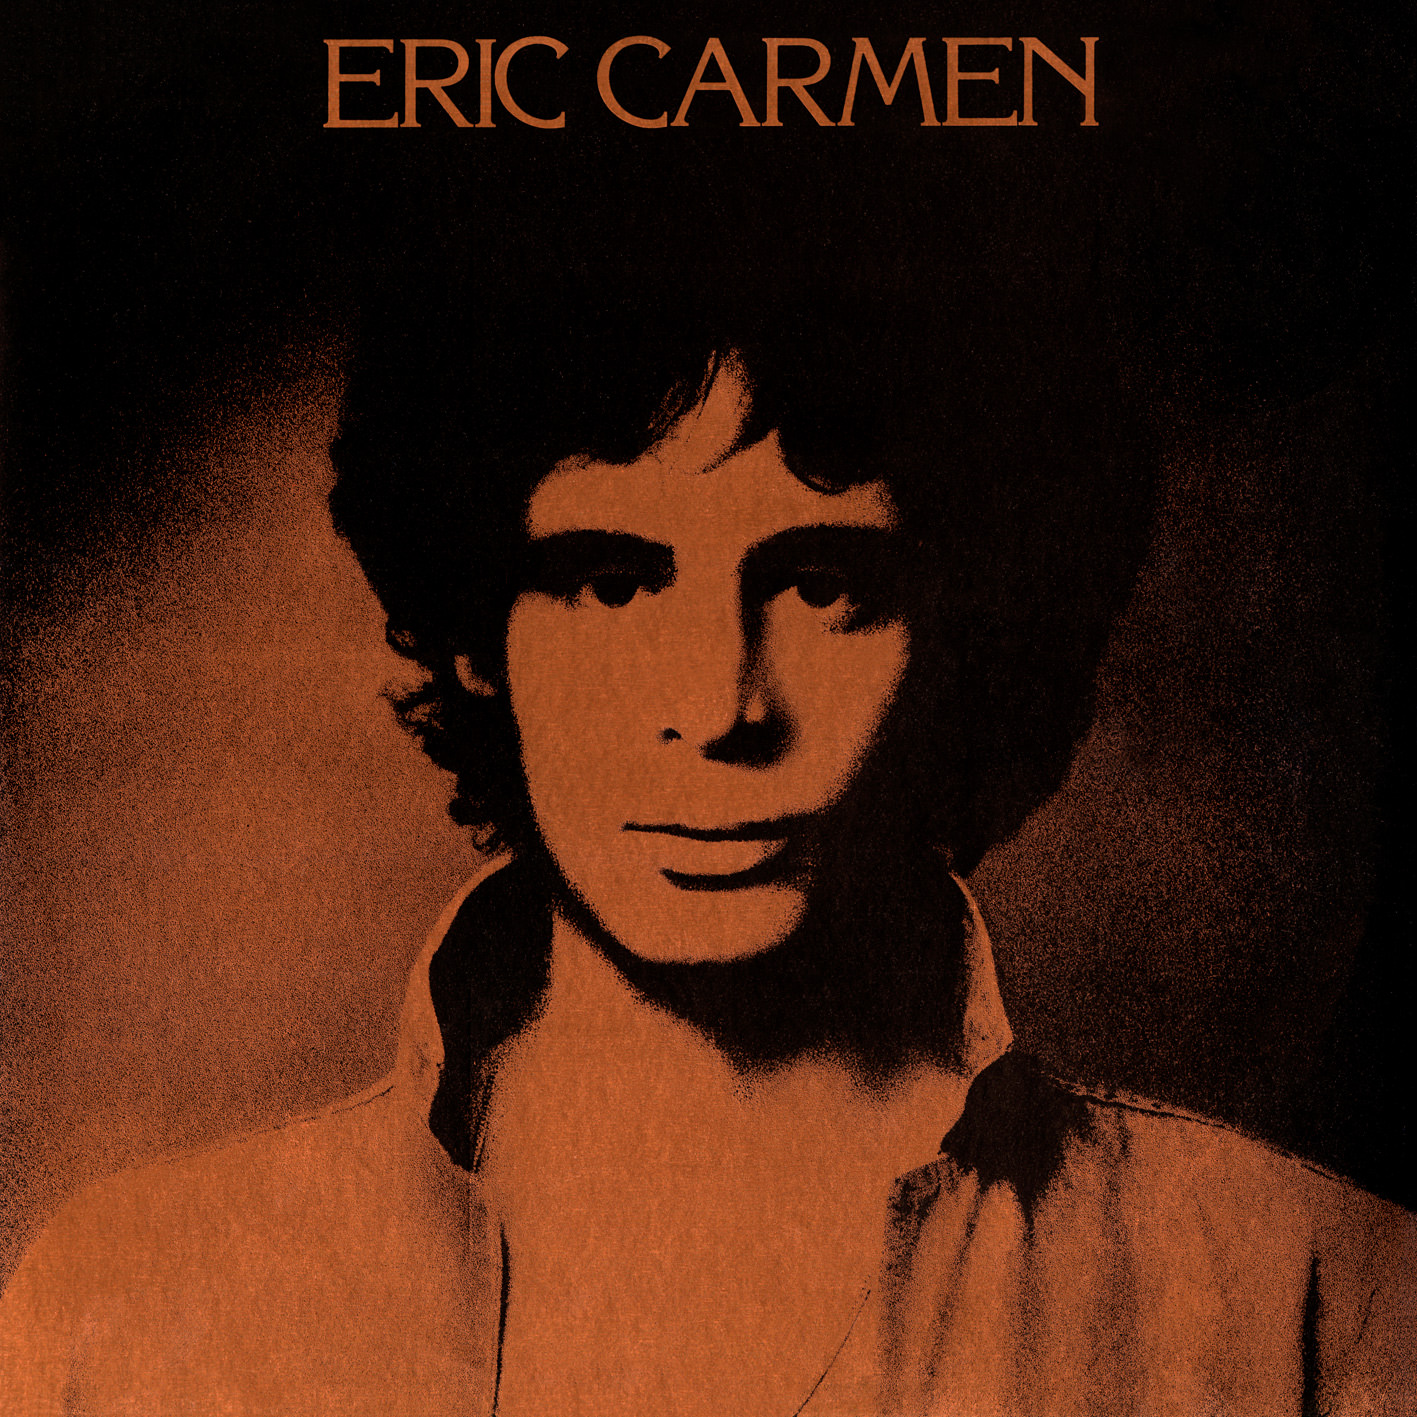 Eric Carmen - Eric Carmen (1975/2017) [HDTracks FLAC 24bit/96kHz]